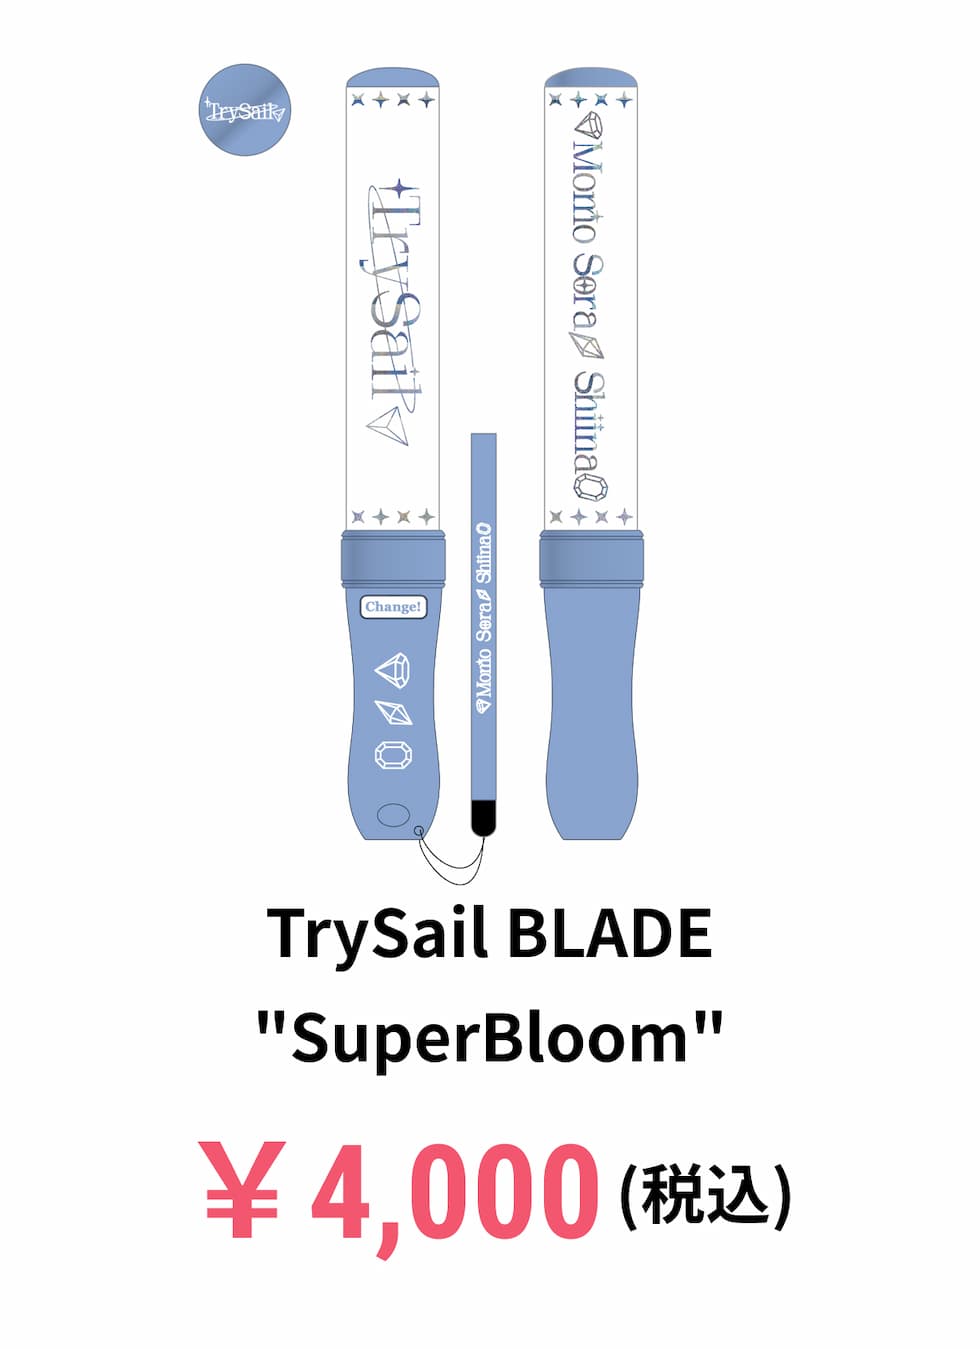 TrySail BLADE "SuperBloom"